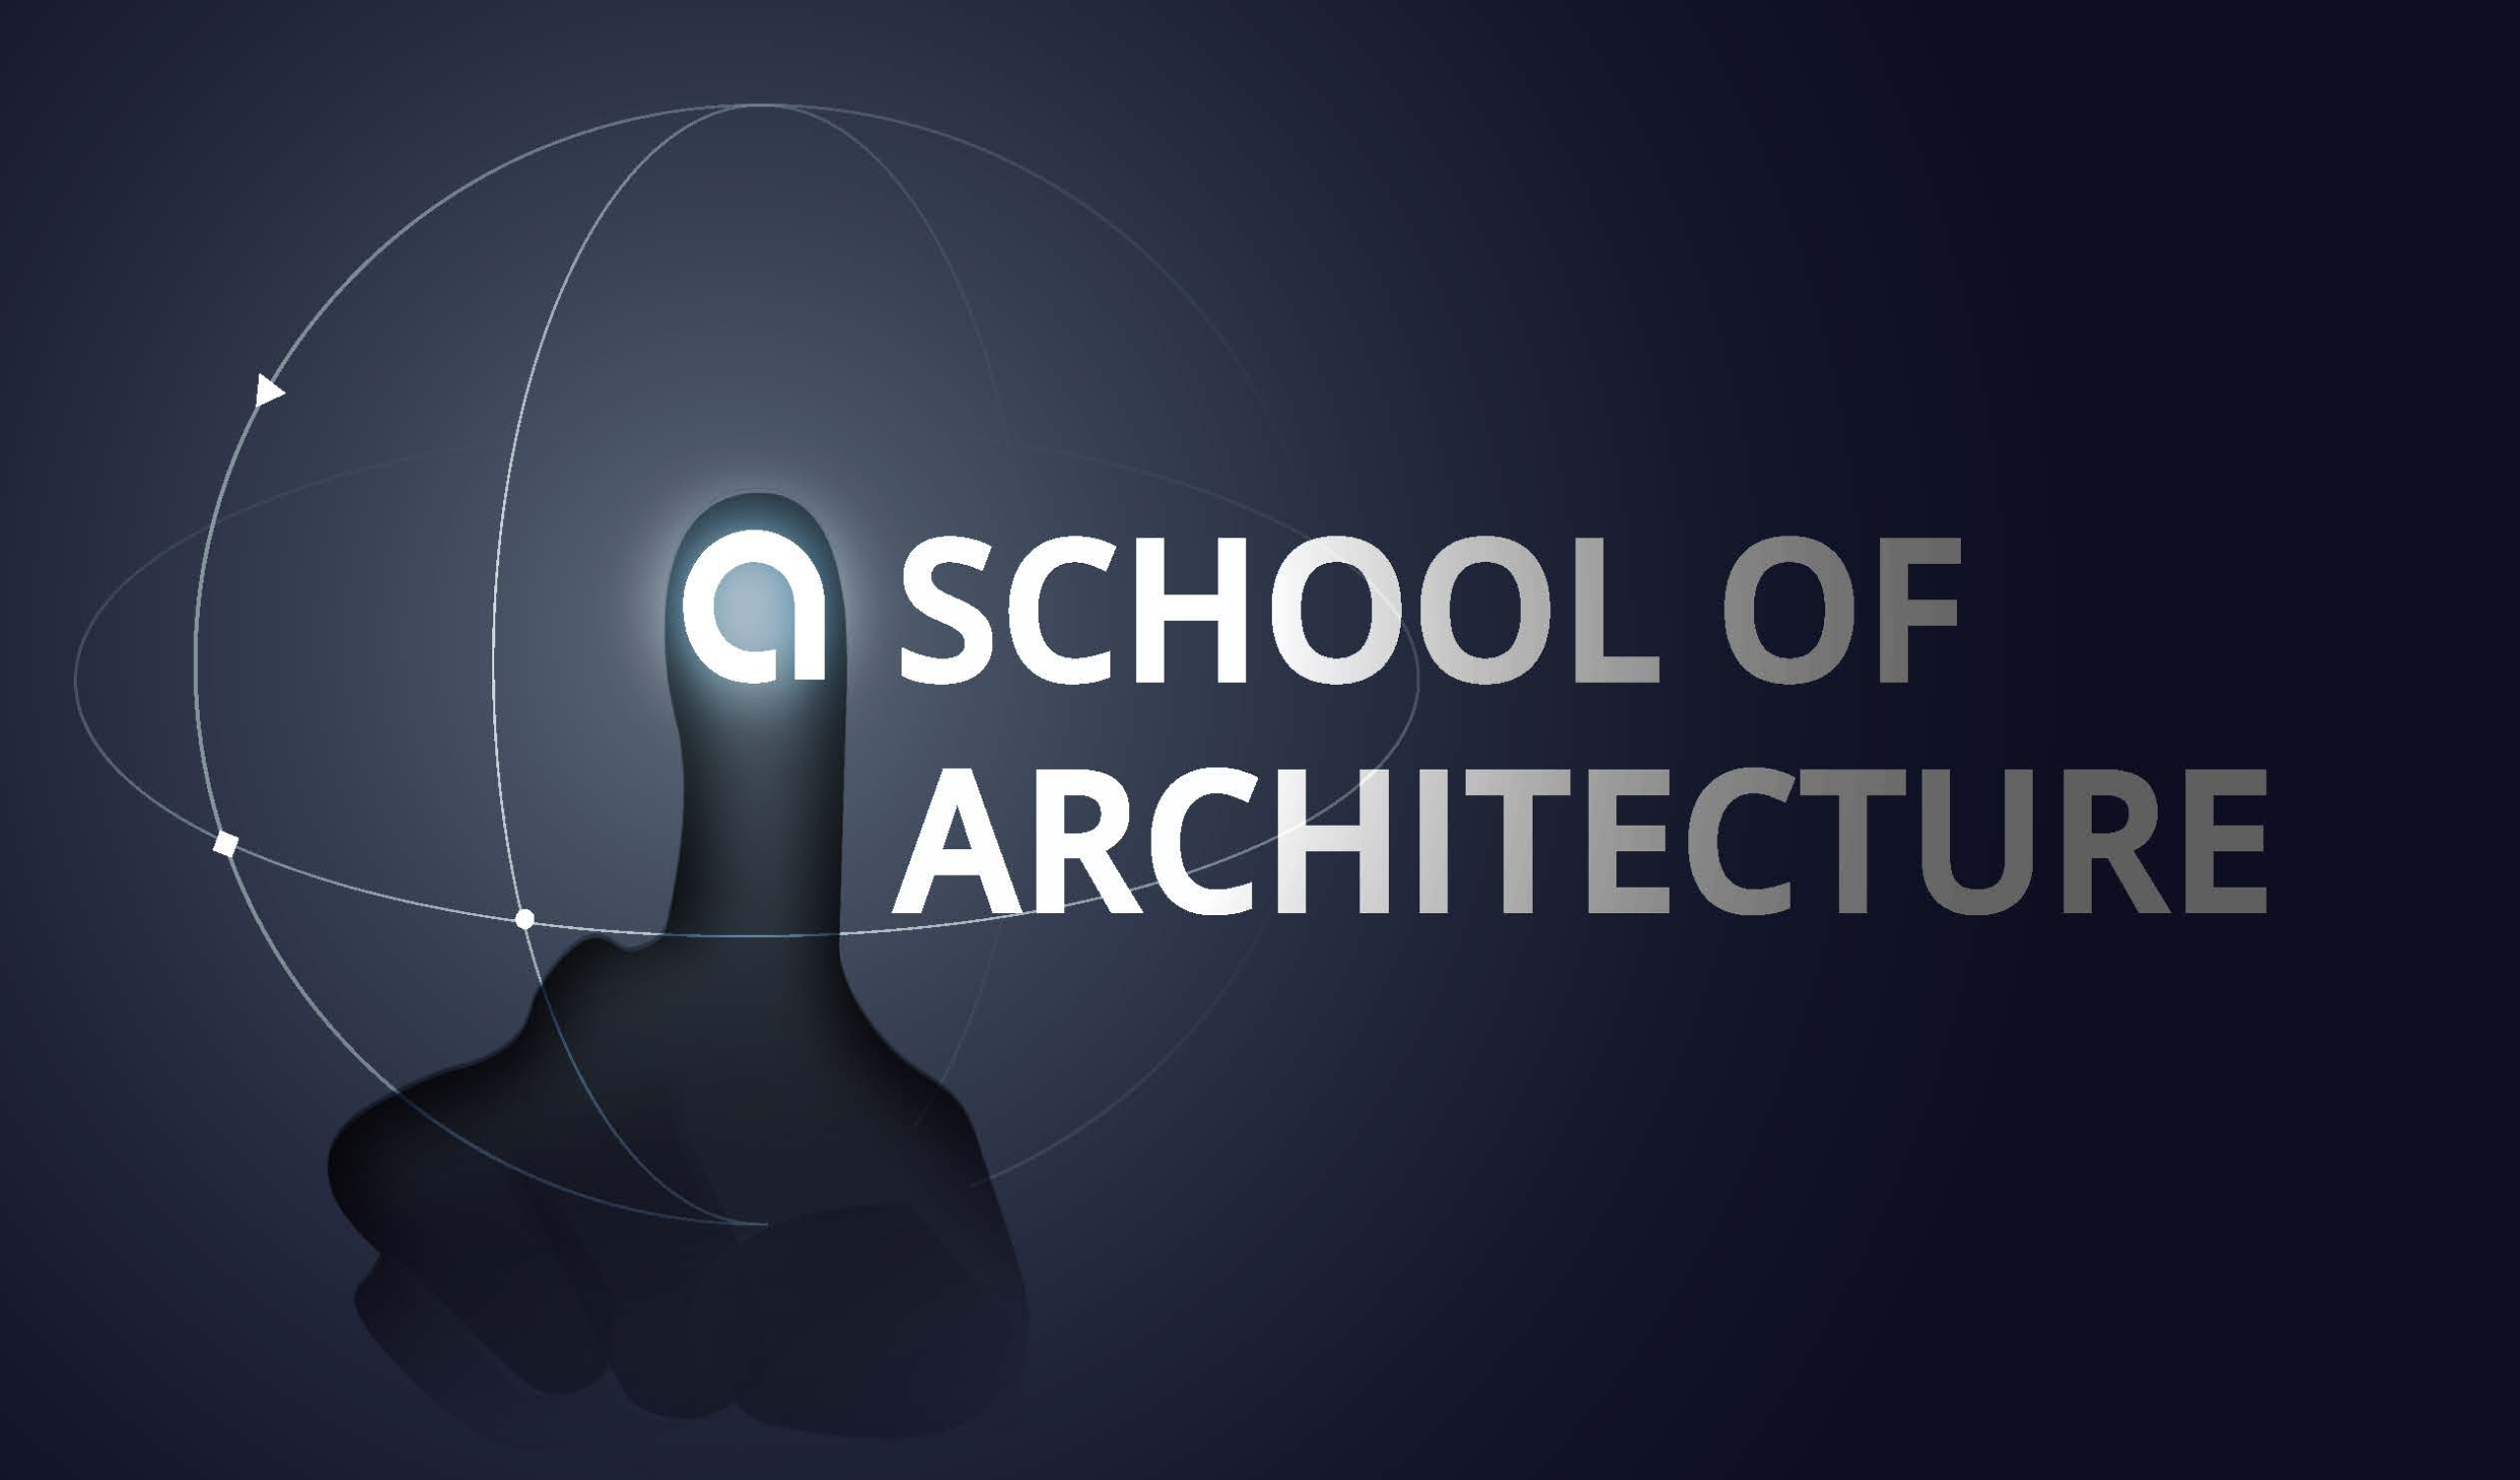 a school of architecture